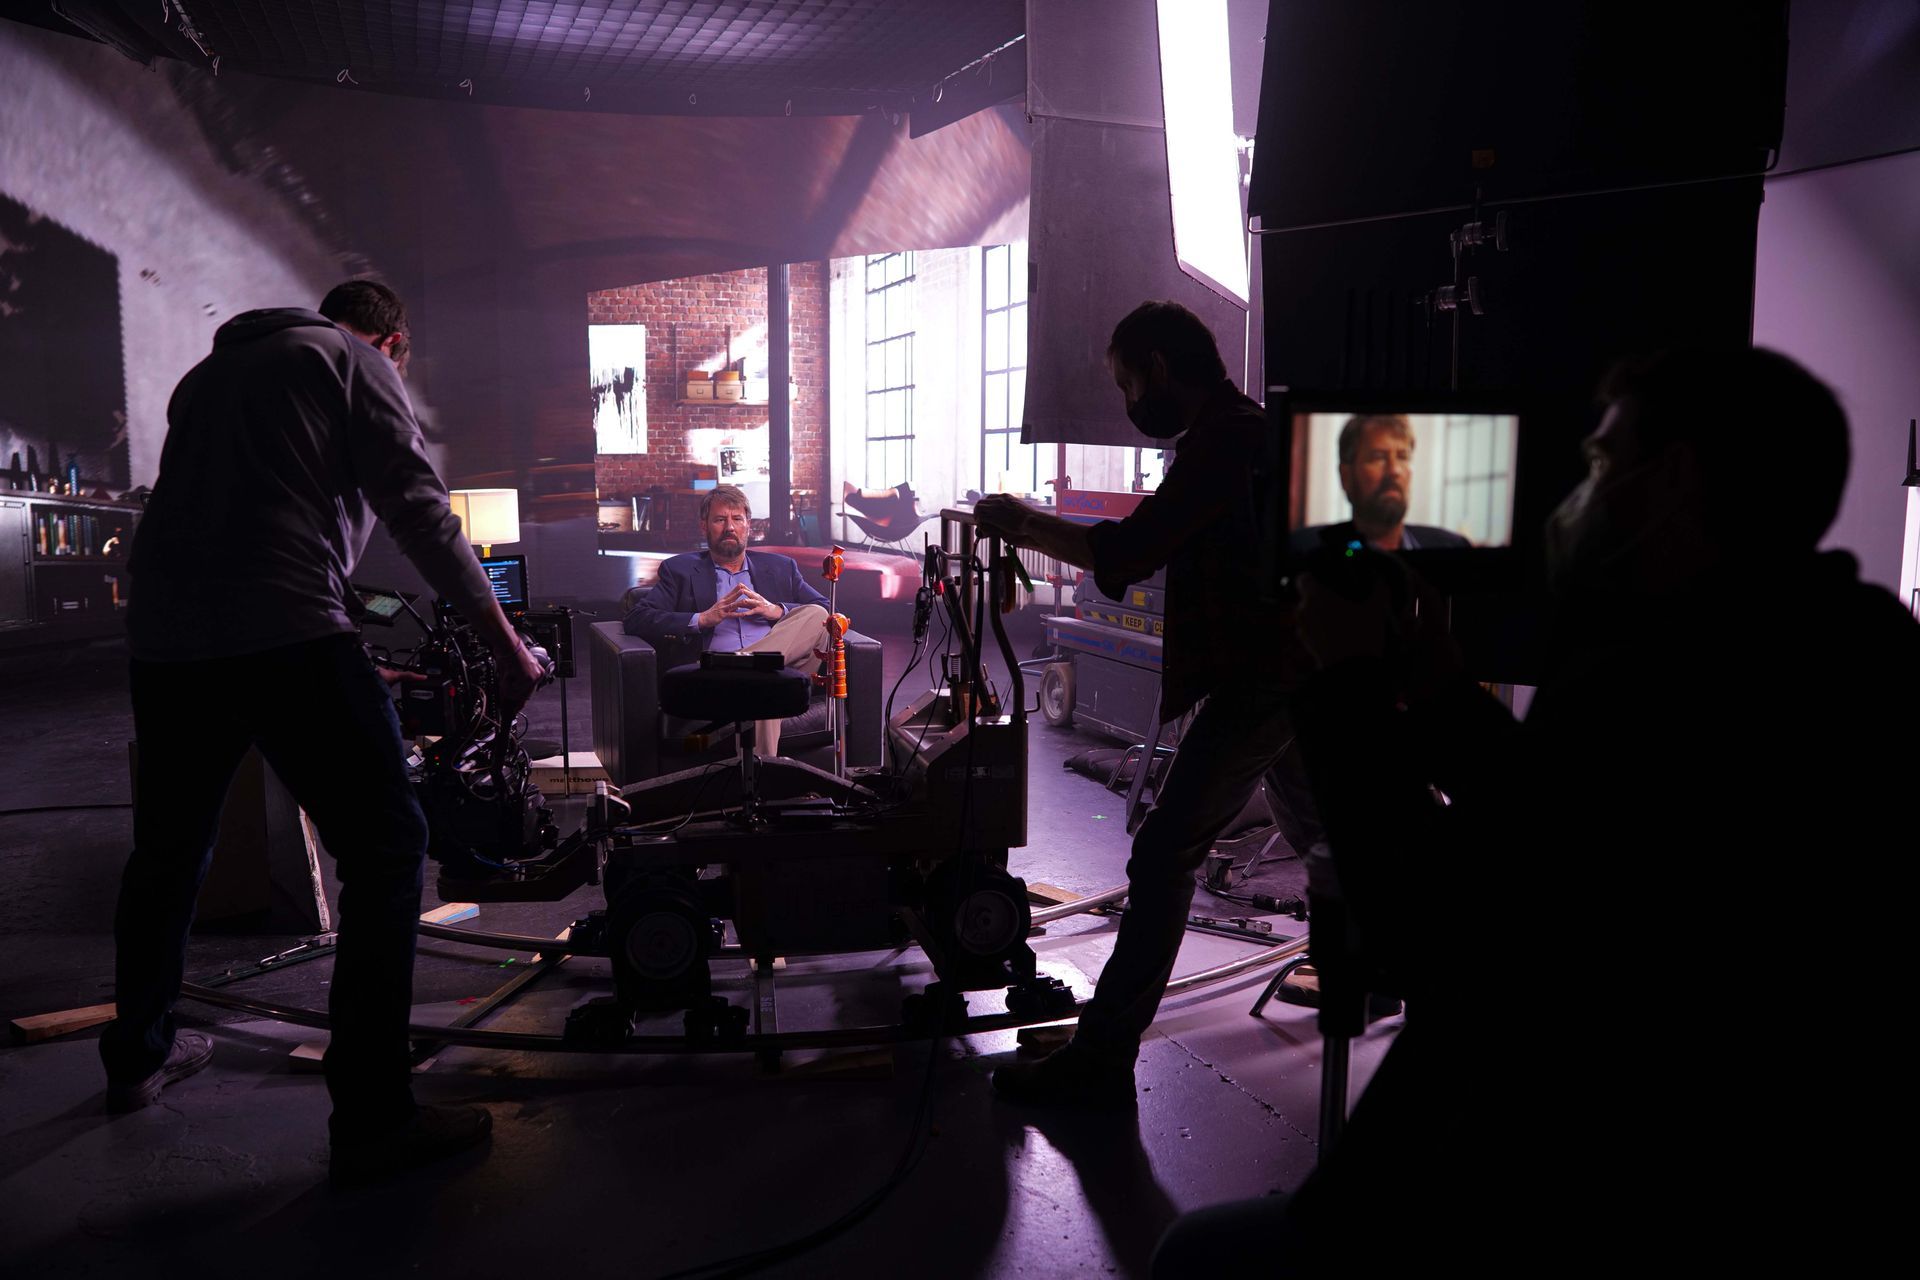 CineSalon studio in baltimore maryland powered by Rockshore Media